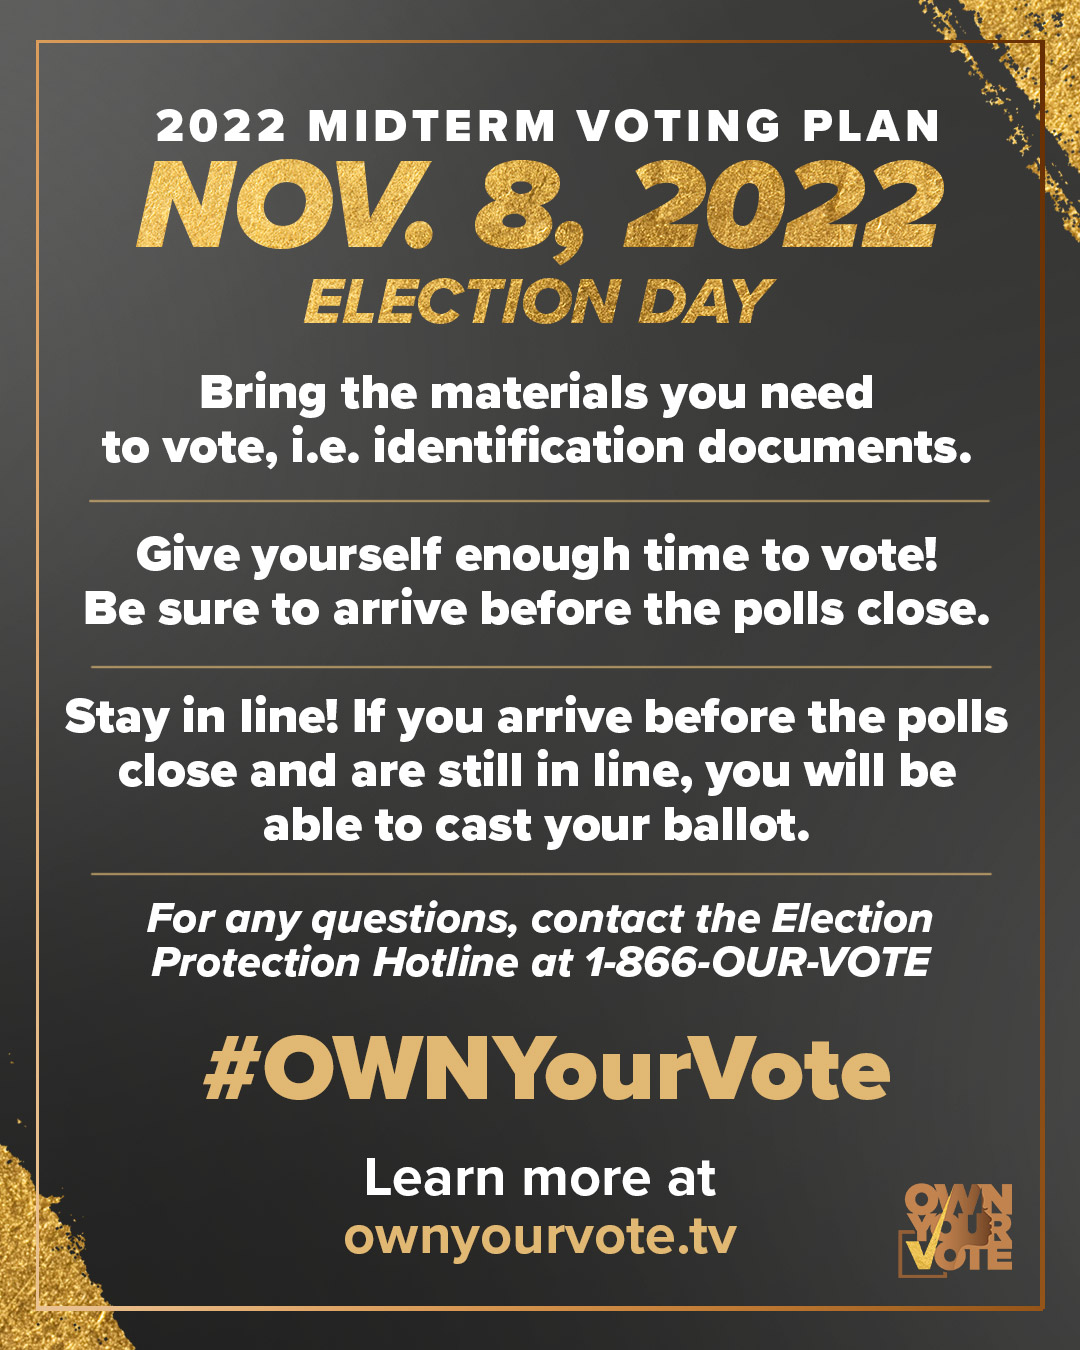 Nov. 8, 2022: Election Day